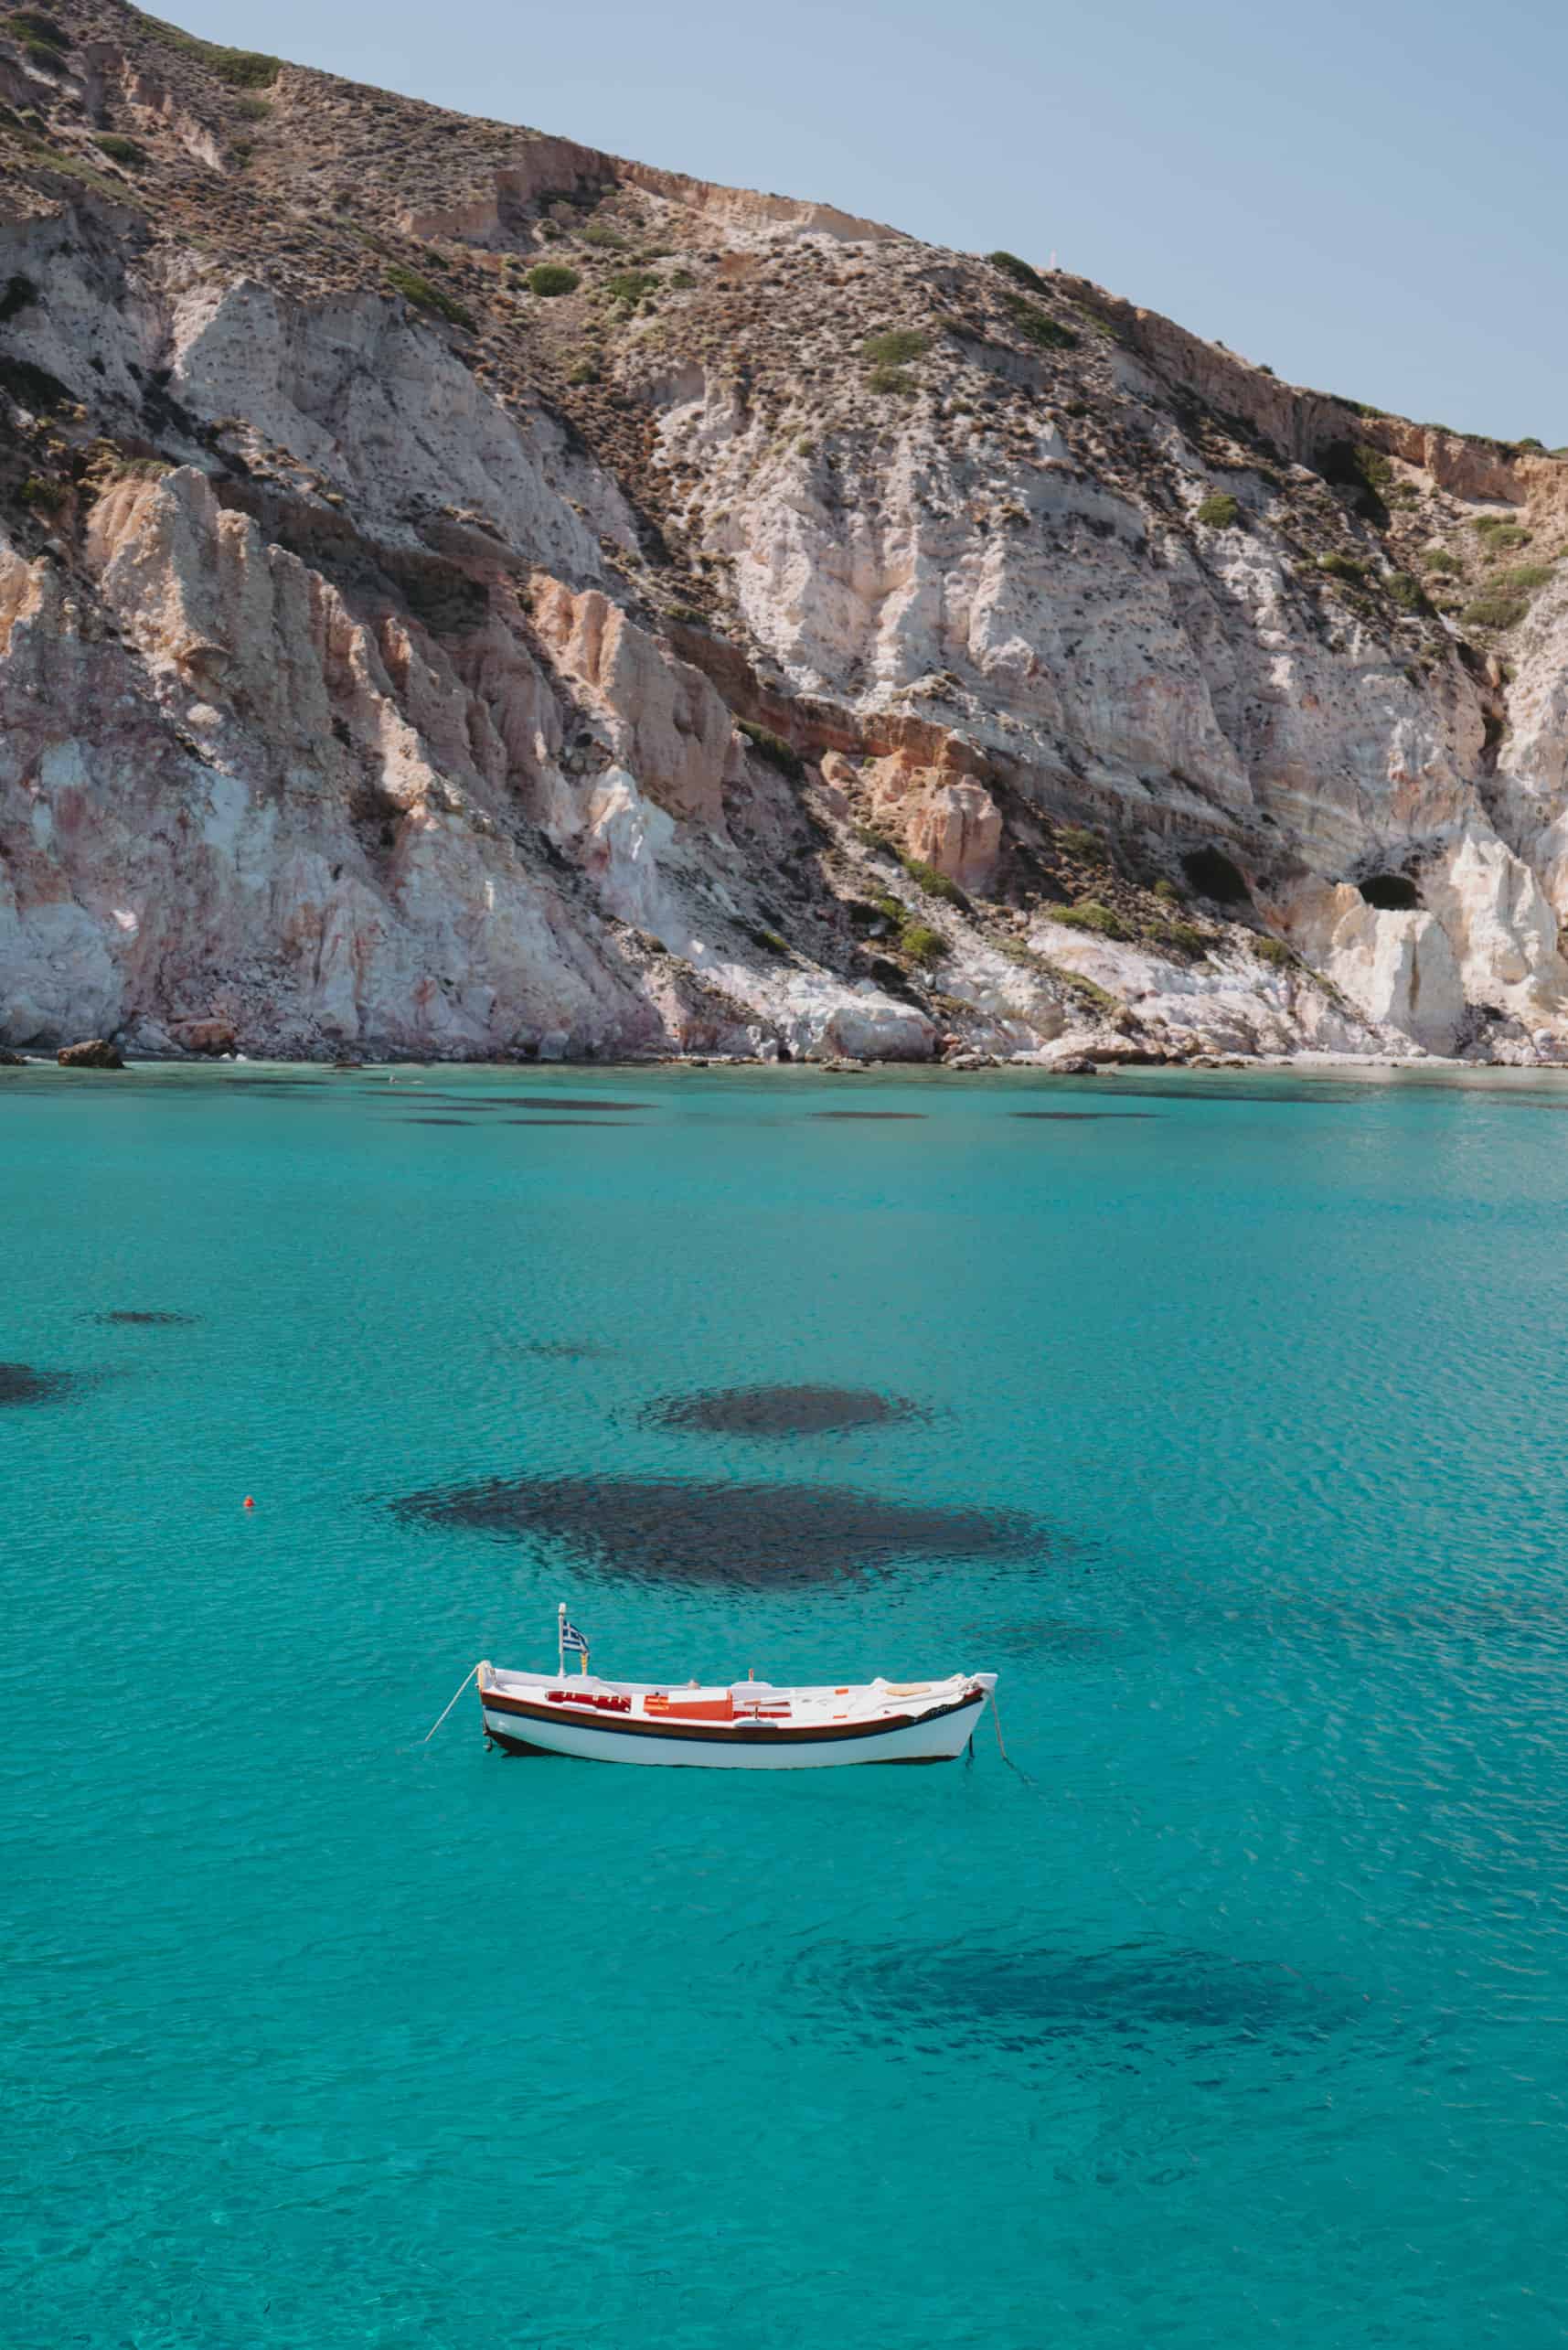 A small boat floats near a cliff on Milos Island, Greece.